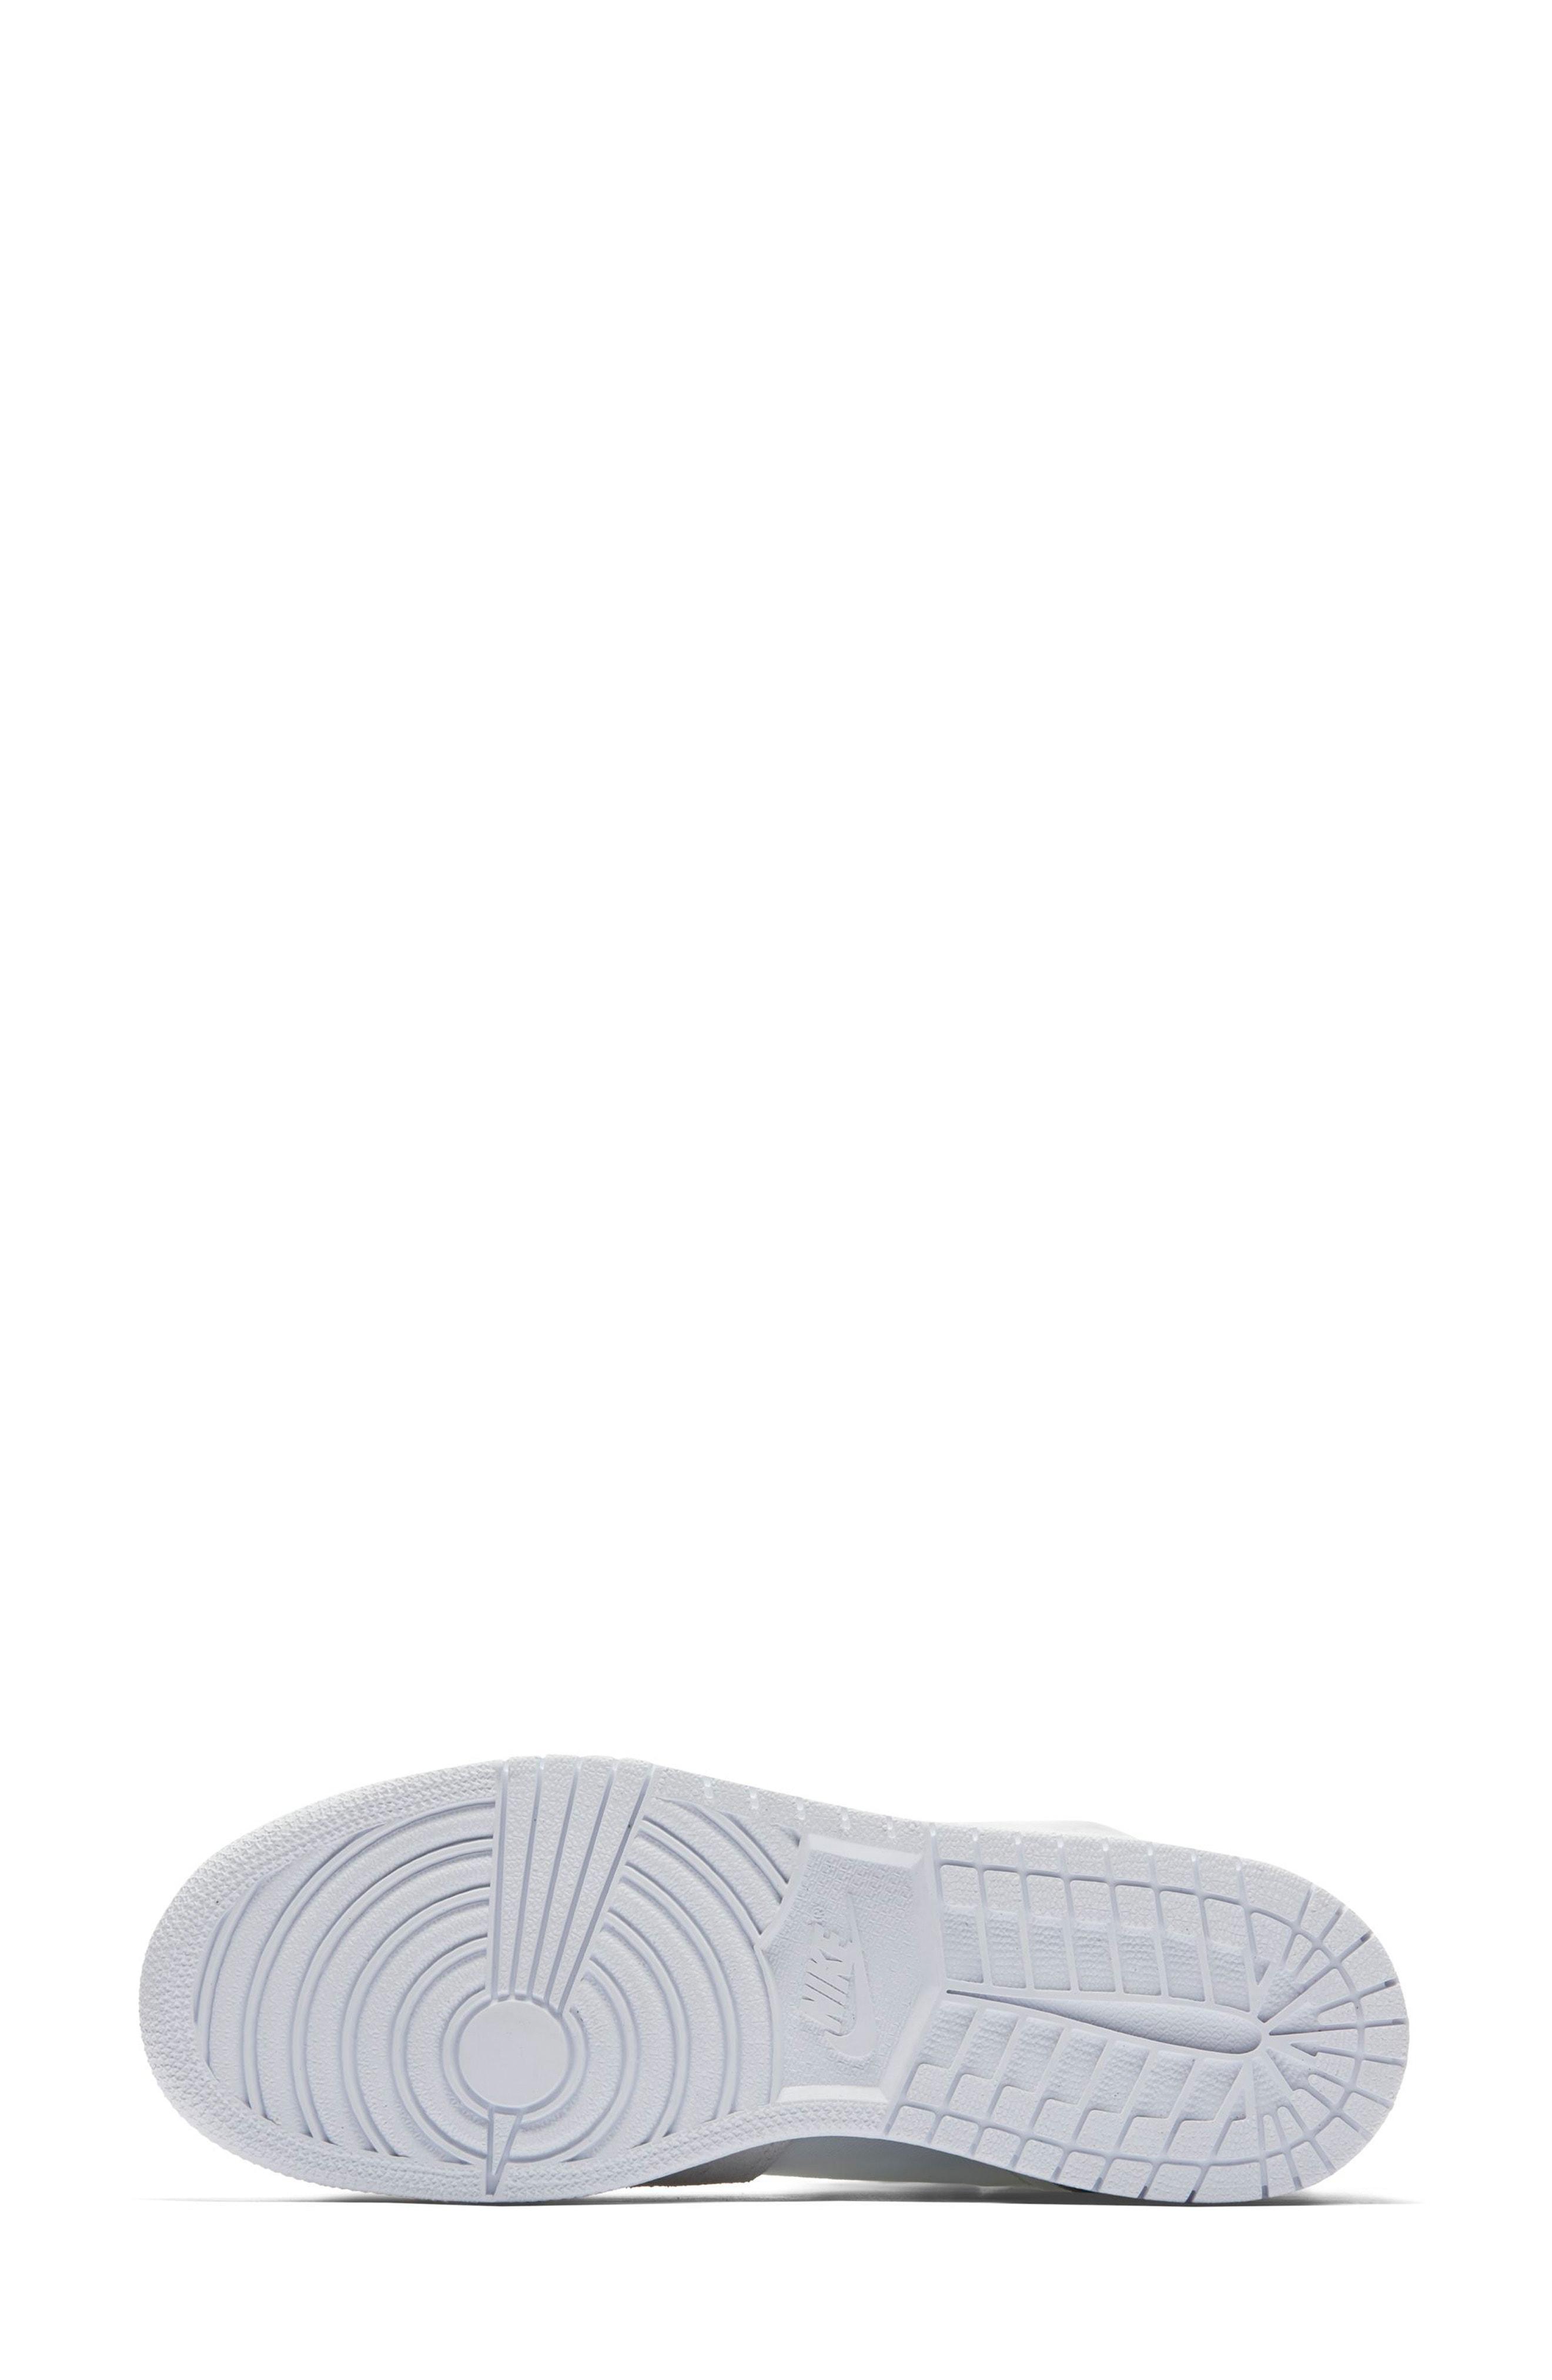 Nike Air Jordan 1 Explorer Xx Convertible High Top Sneaker In Off White ...